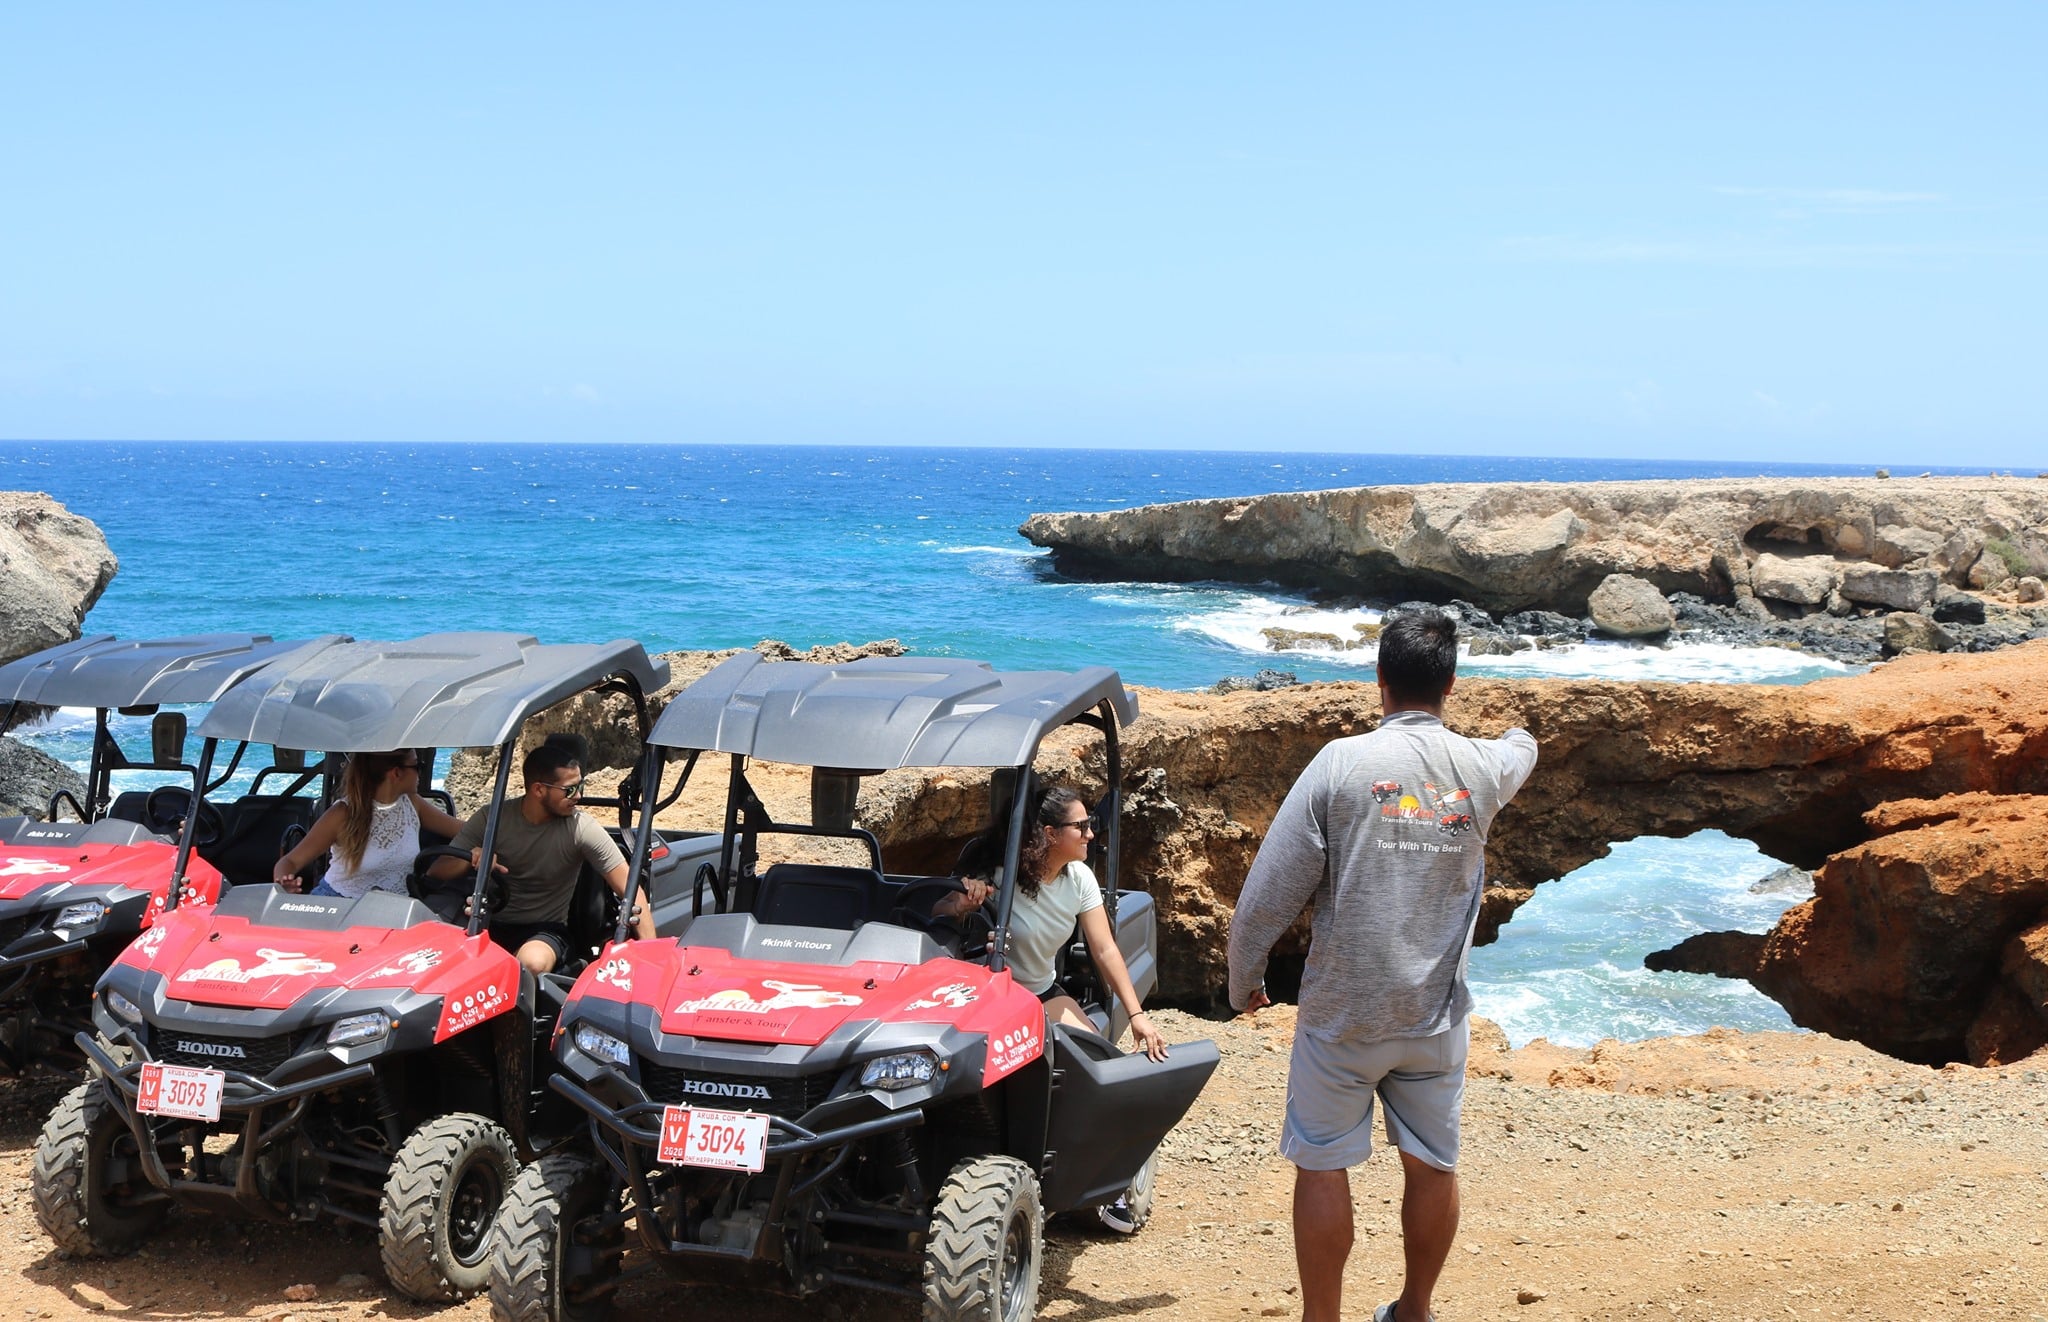 KINI EXPLORING ARUBA ATV TOUR Aruba - vacaystore.com